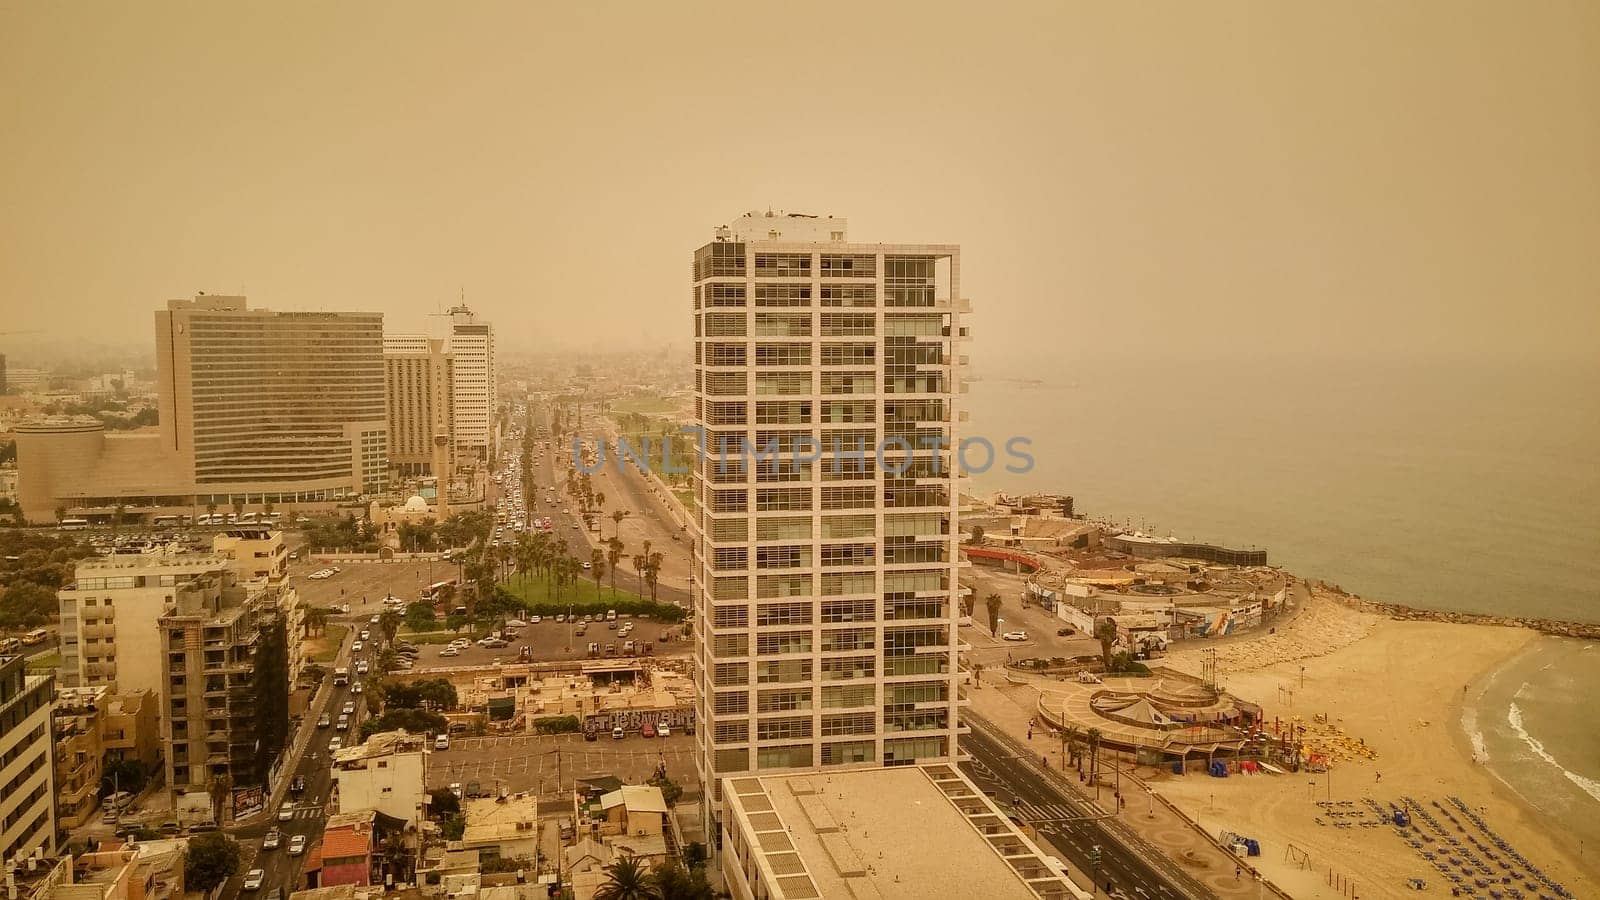 Tel Aviv city during the haze of sand on August 9, 2015
